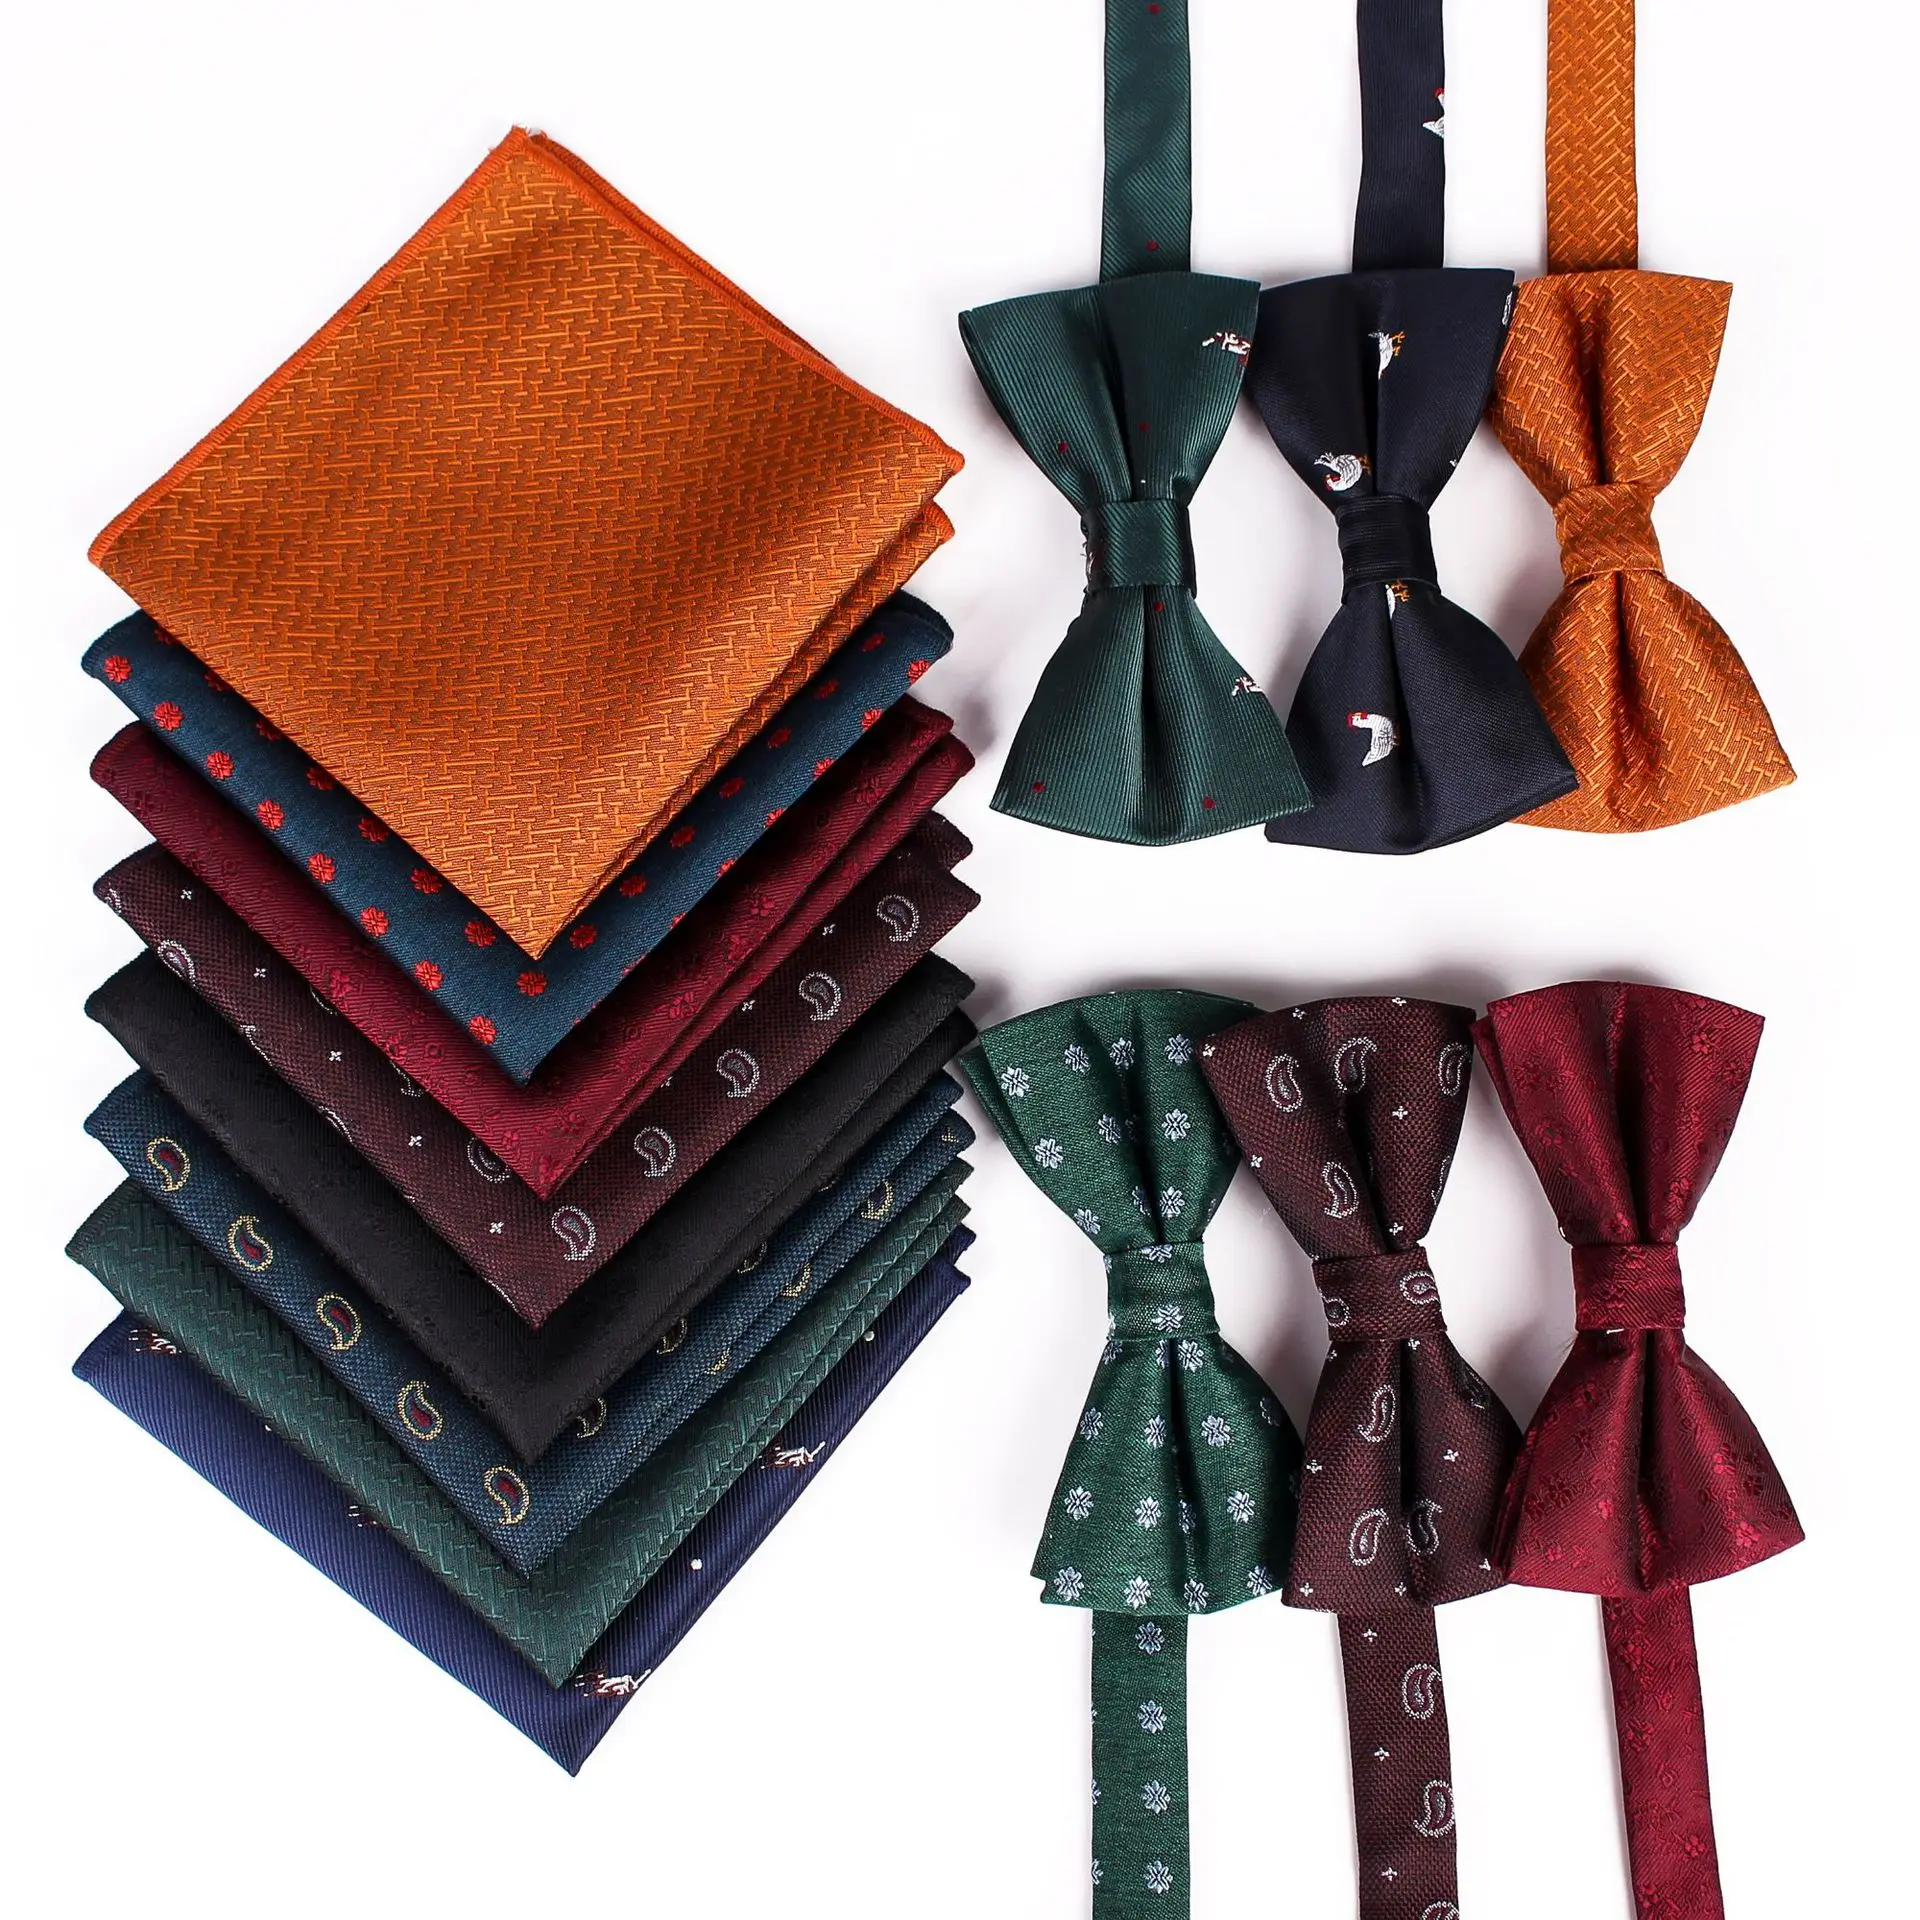 

2021 New Sale Fashion Tie for Man Clothing Accessories Pocket Square Bowtie A Set Of Handkerchiefs Original Luxury Men's Bow Tie